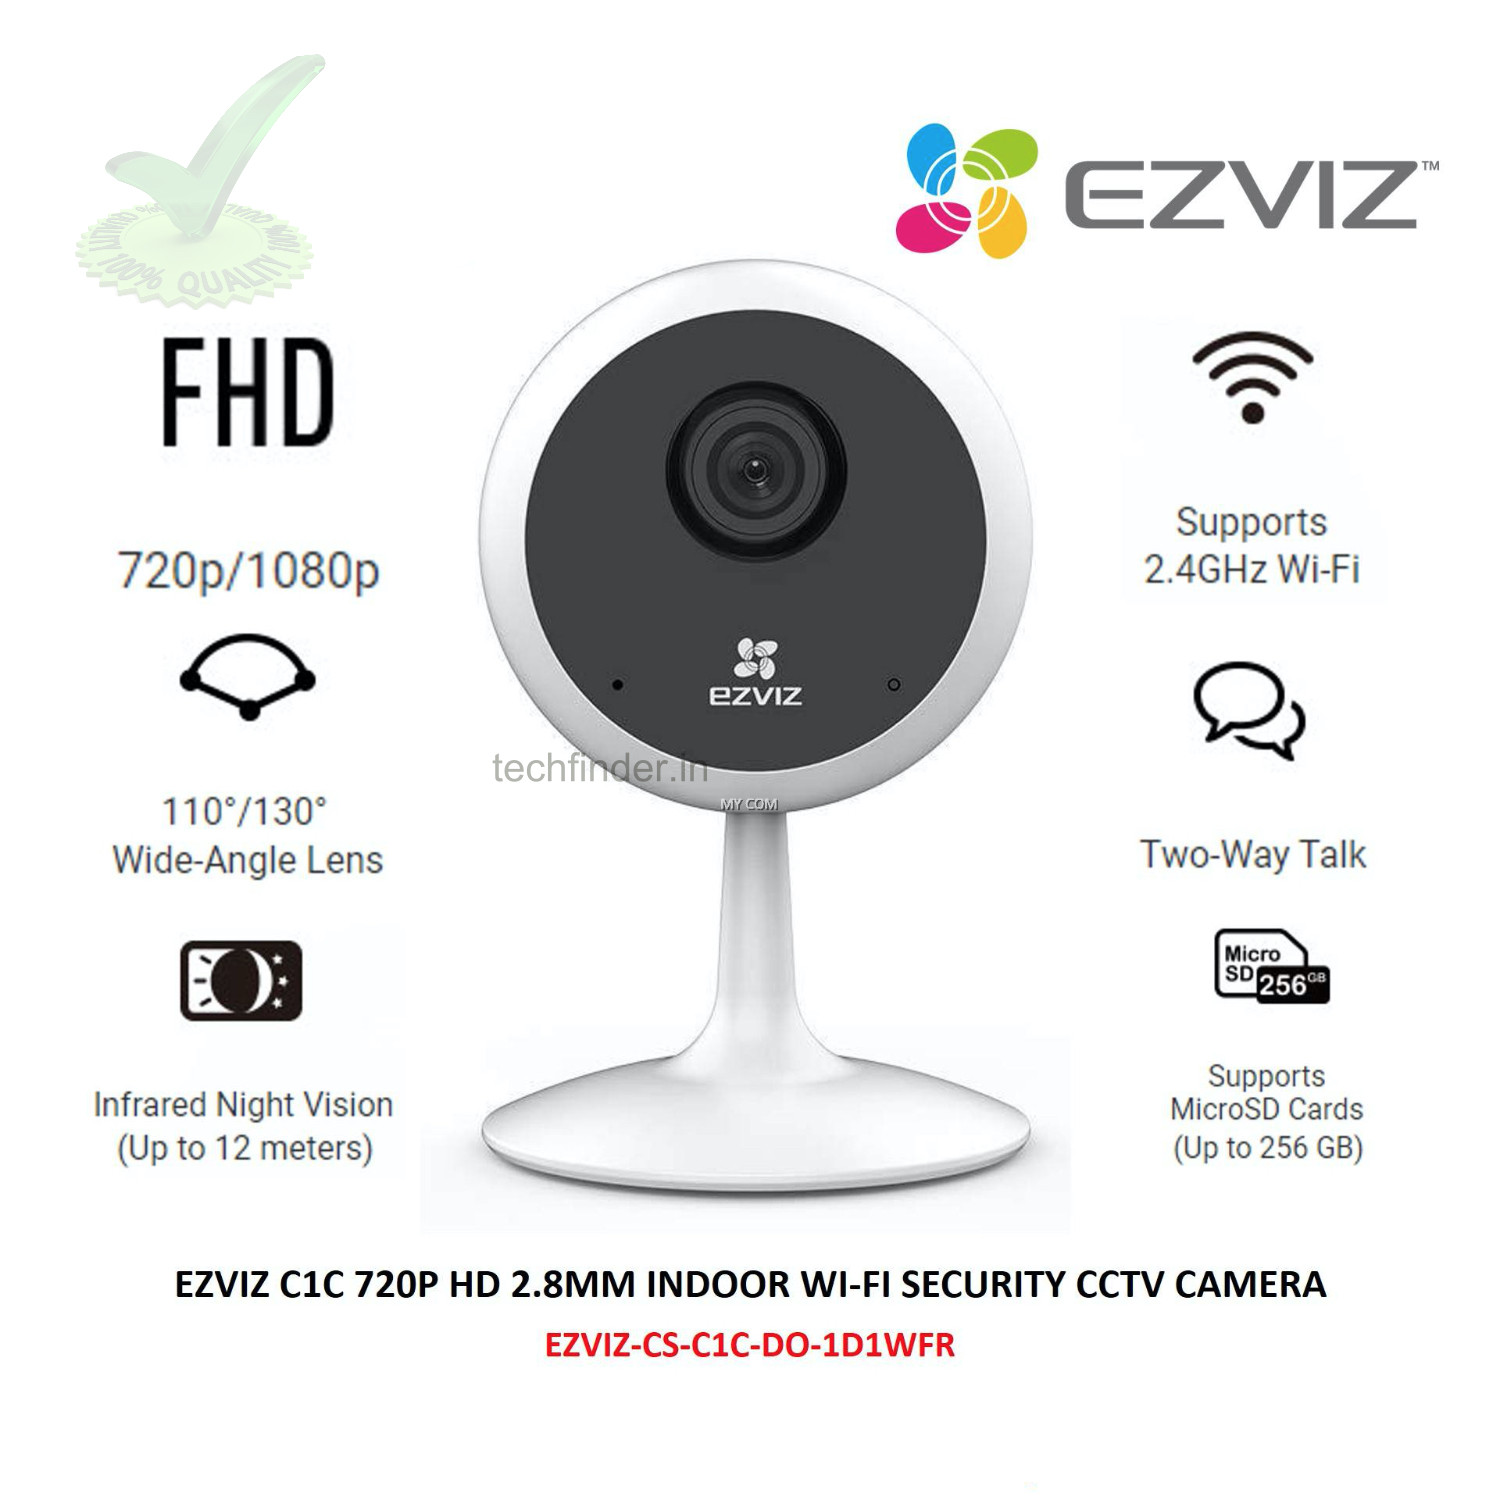 Ezviz C1C 720p HD Resolution Indoor Digital Wi-Fi Camera